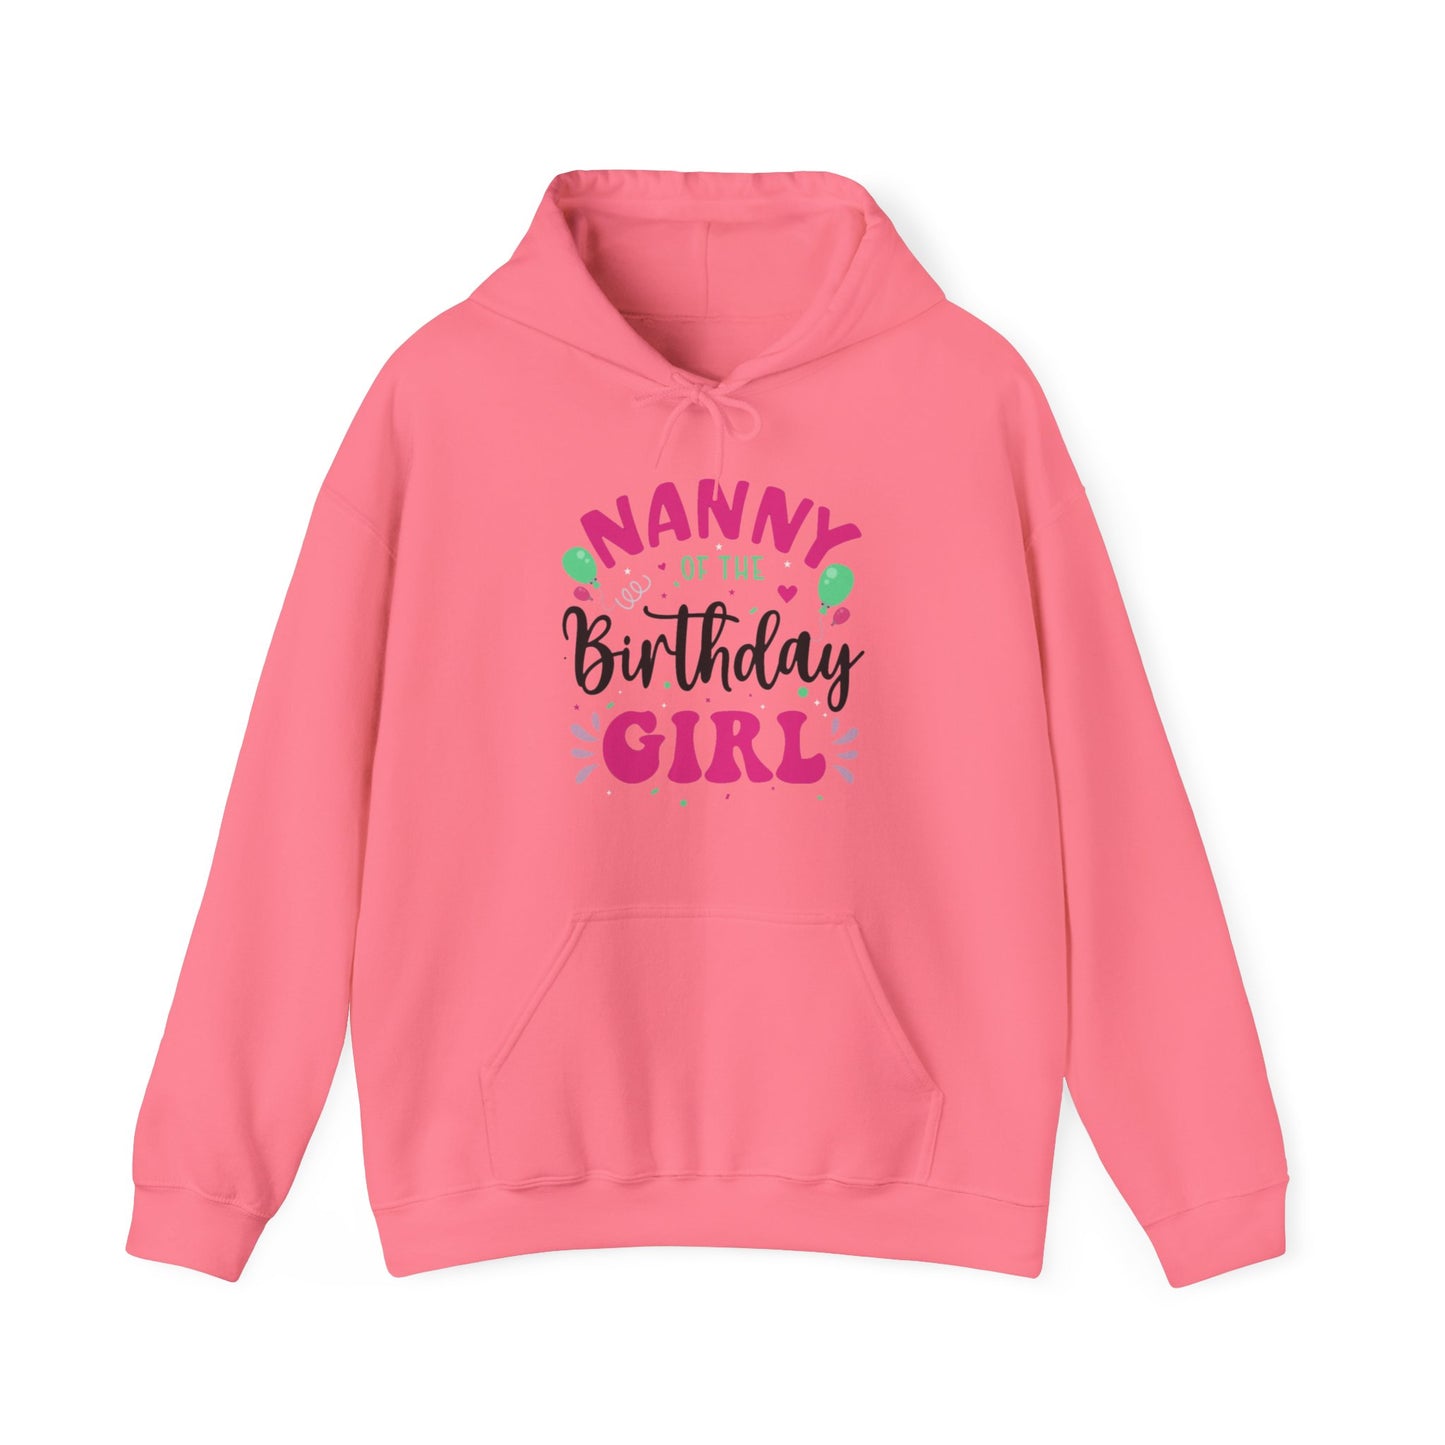 Nanny of the Birthday Girl - Hoodie